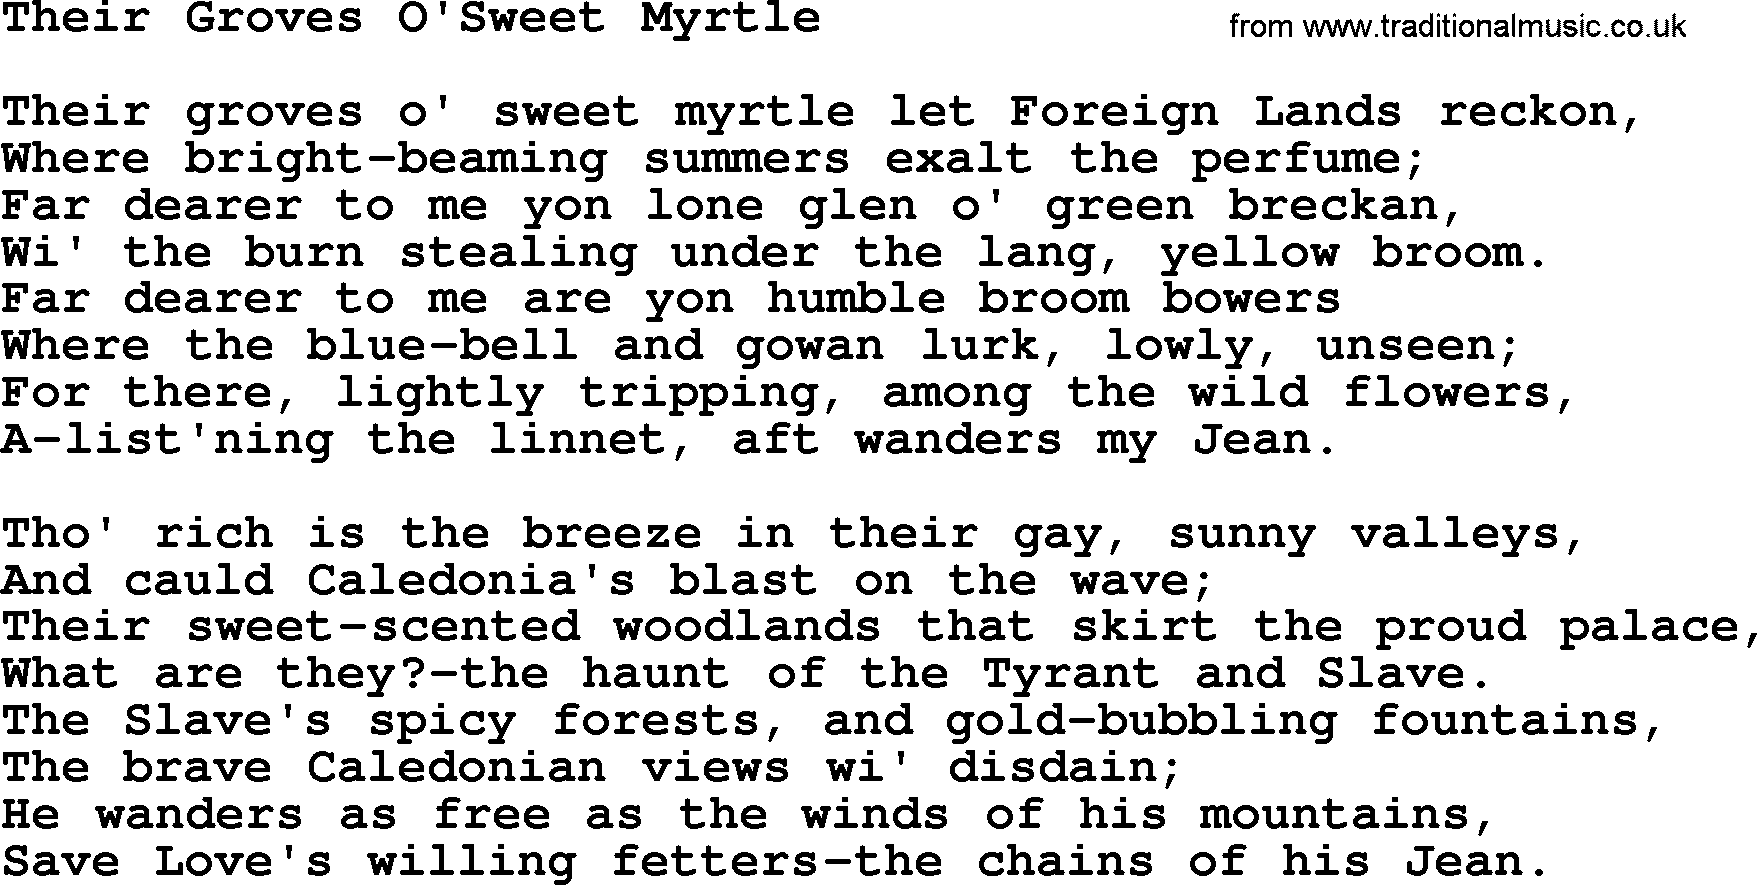 Robert Burns Songs & Lyrics: Their Groves O'sweet Myrtle